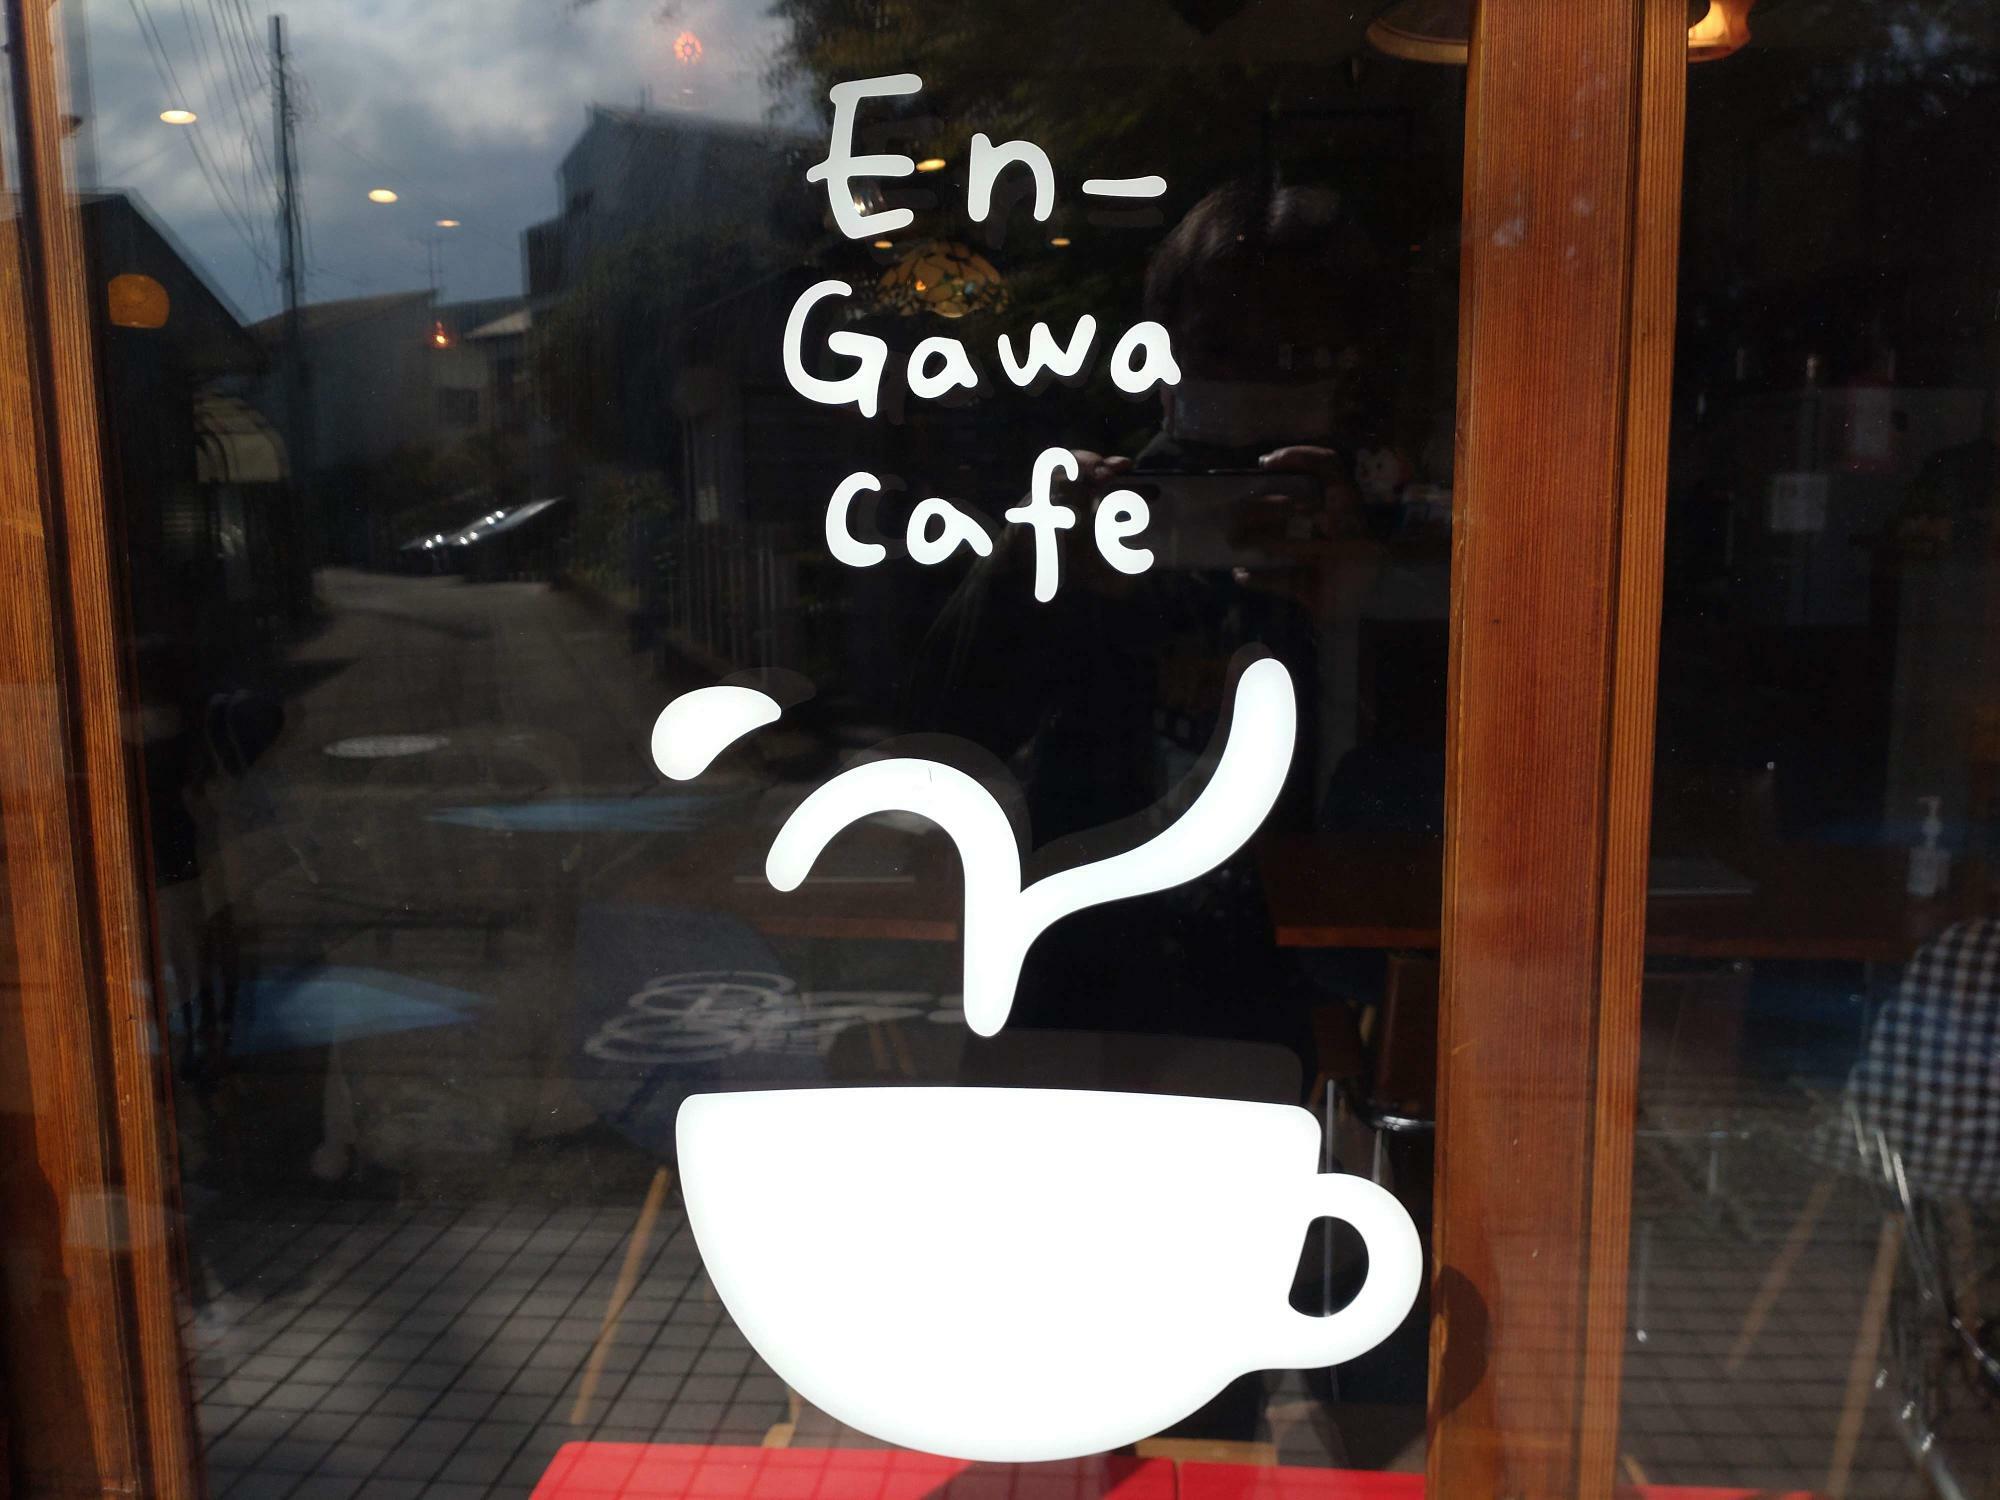 En-gawaCafeのロゴ。ほっこりイメージに癒やされます。